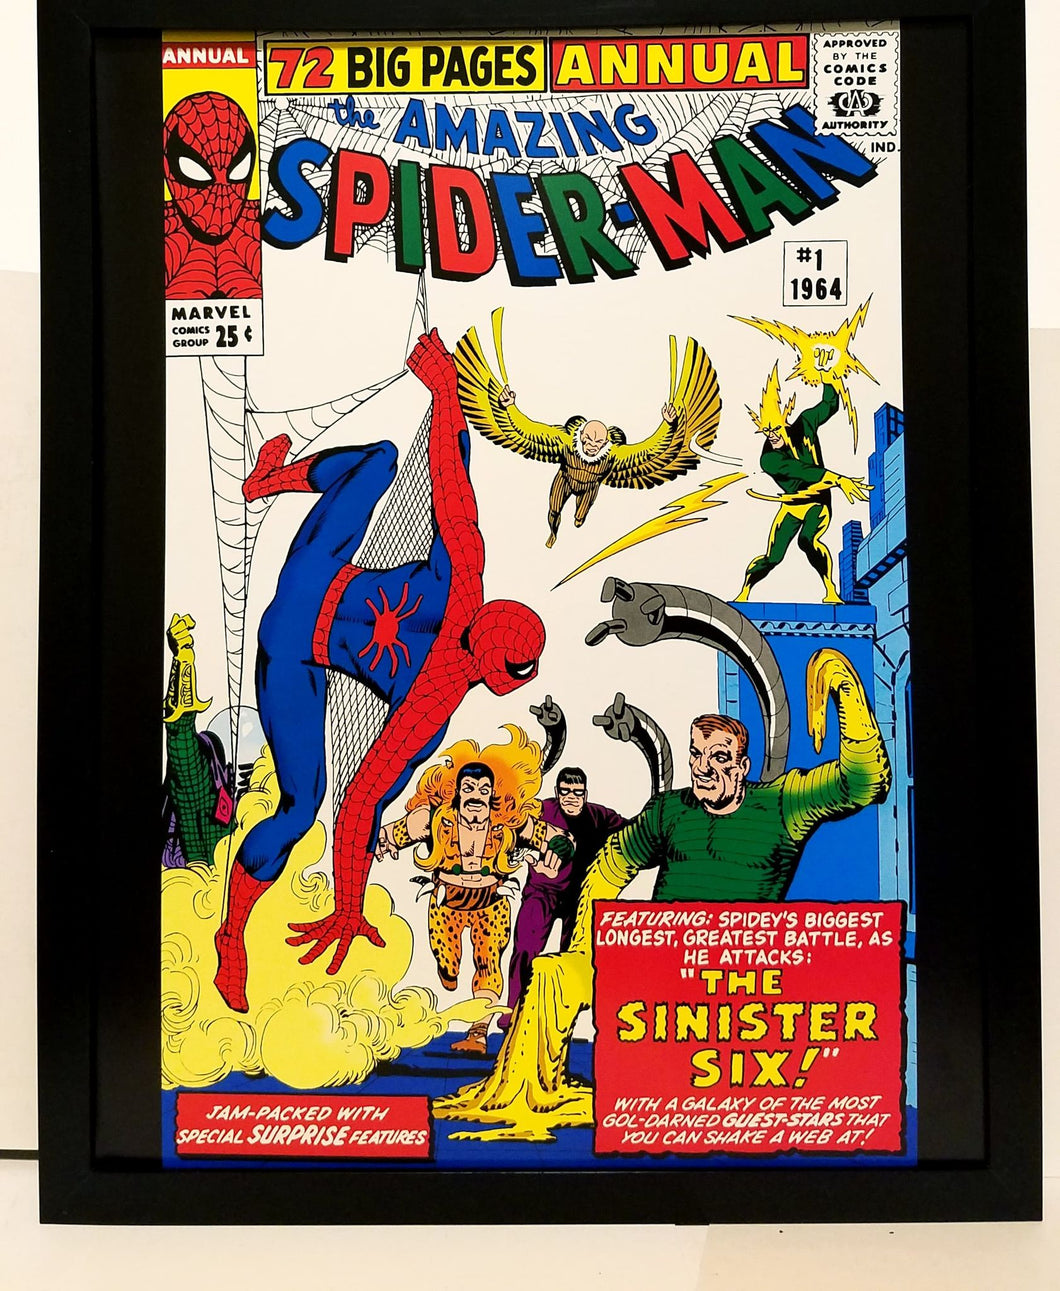 Amazing Spider-Man Annual #1 by Steve Ditko 11x14 FRAMED Marvel Comics Art Print Poster